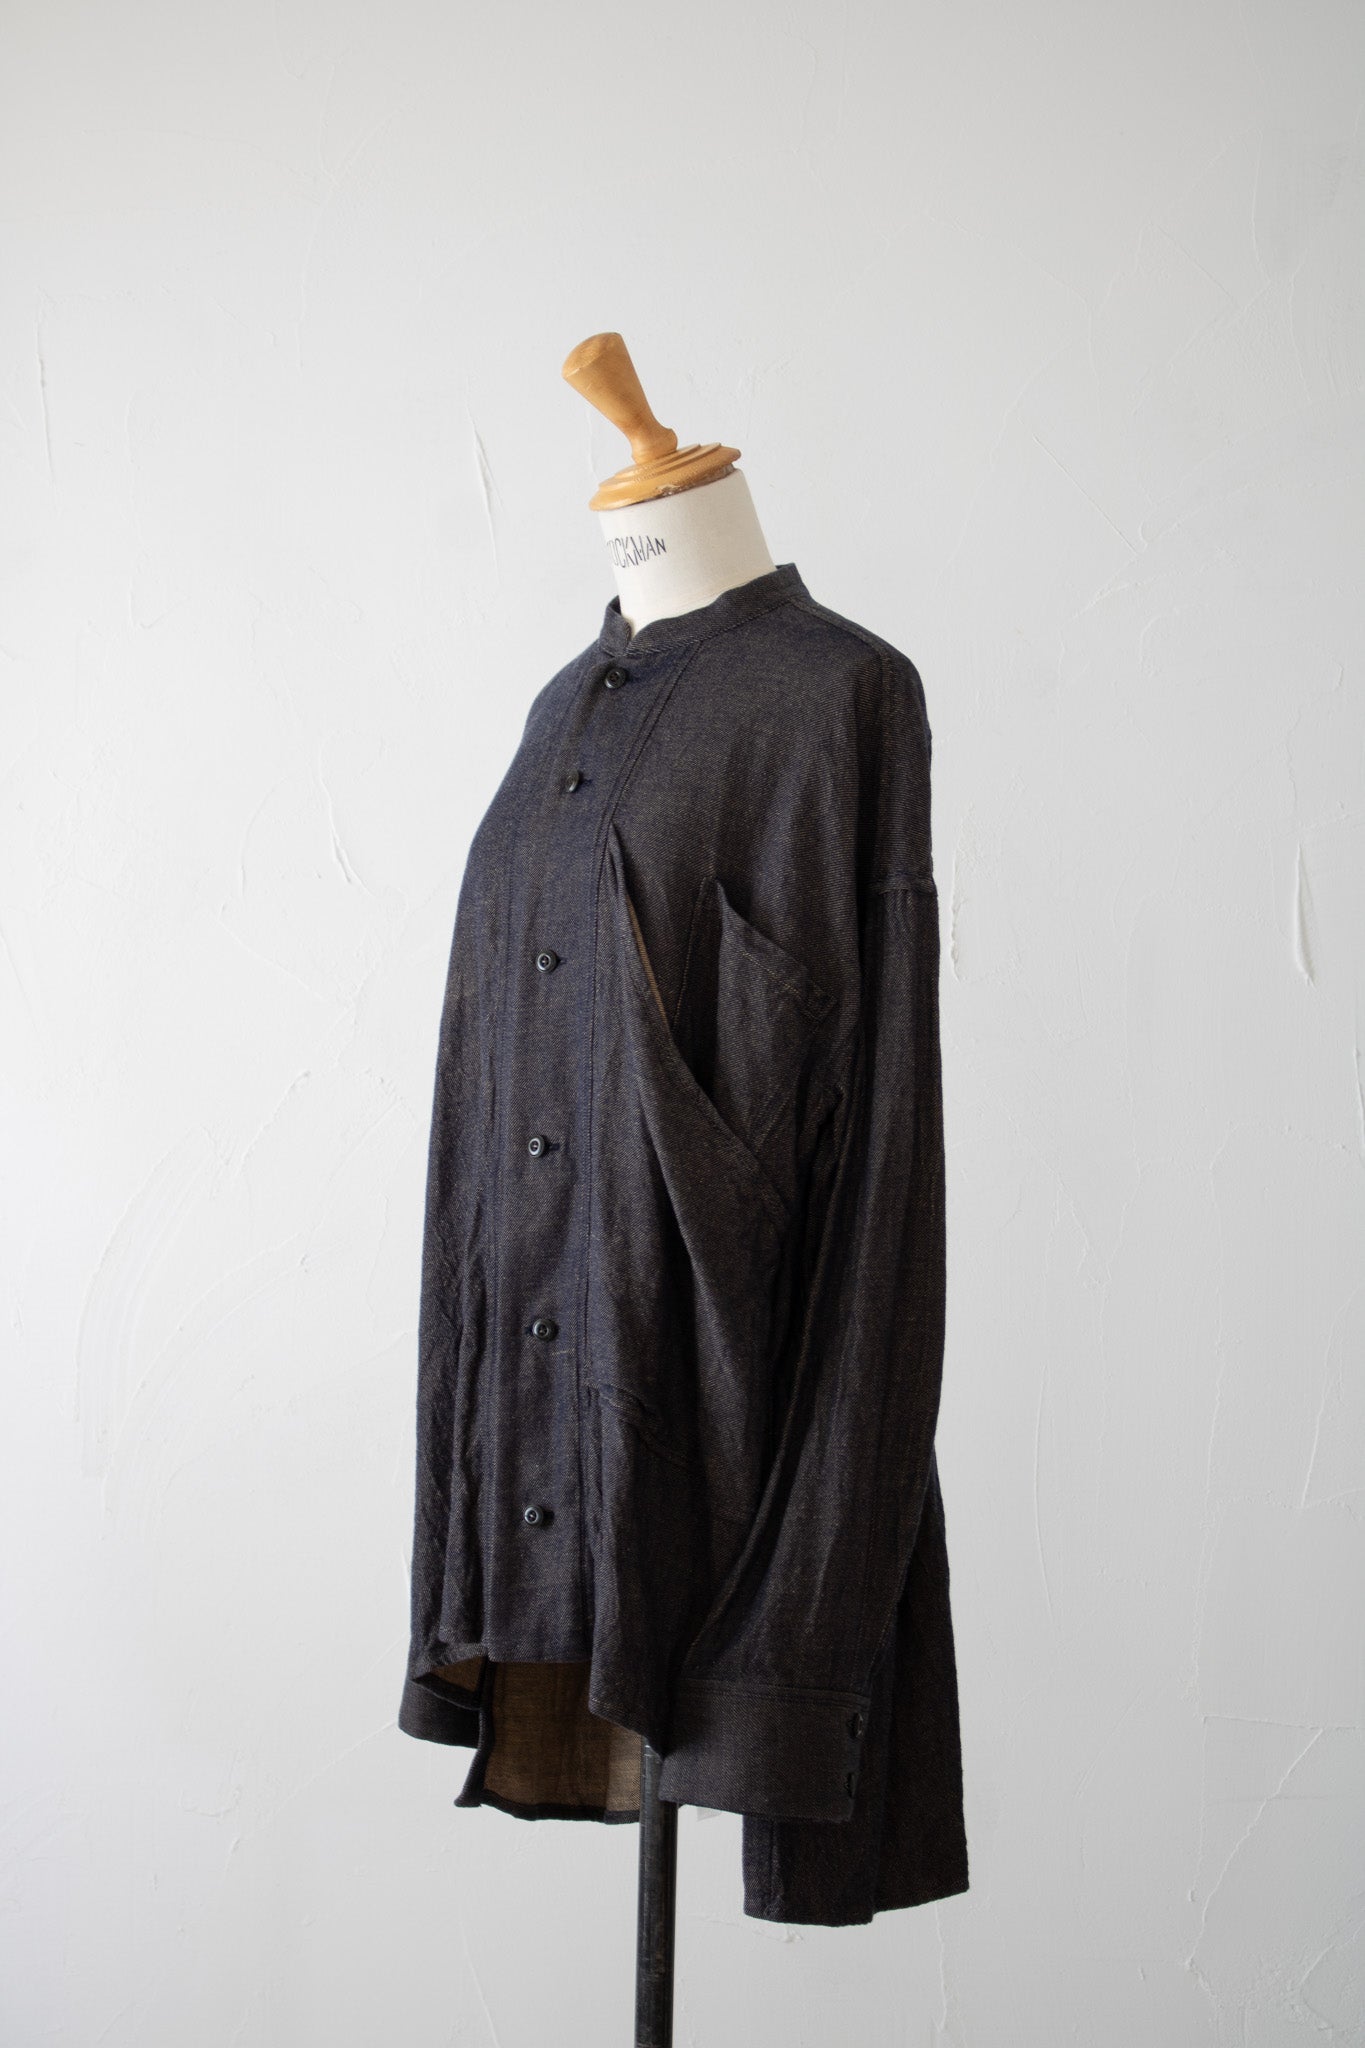 lama shirt K505 cotton twill navy/sepia